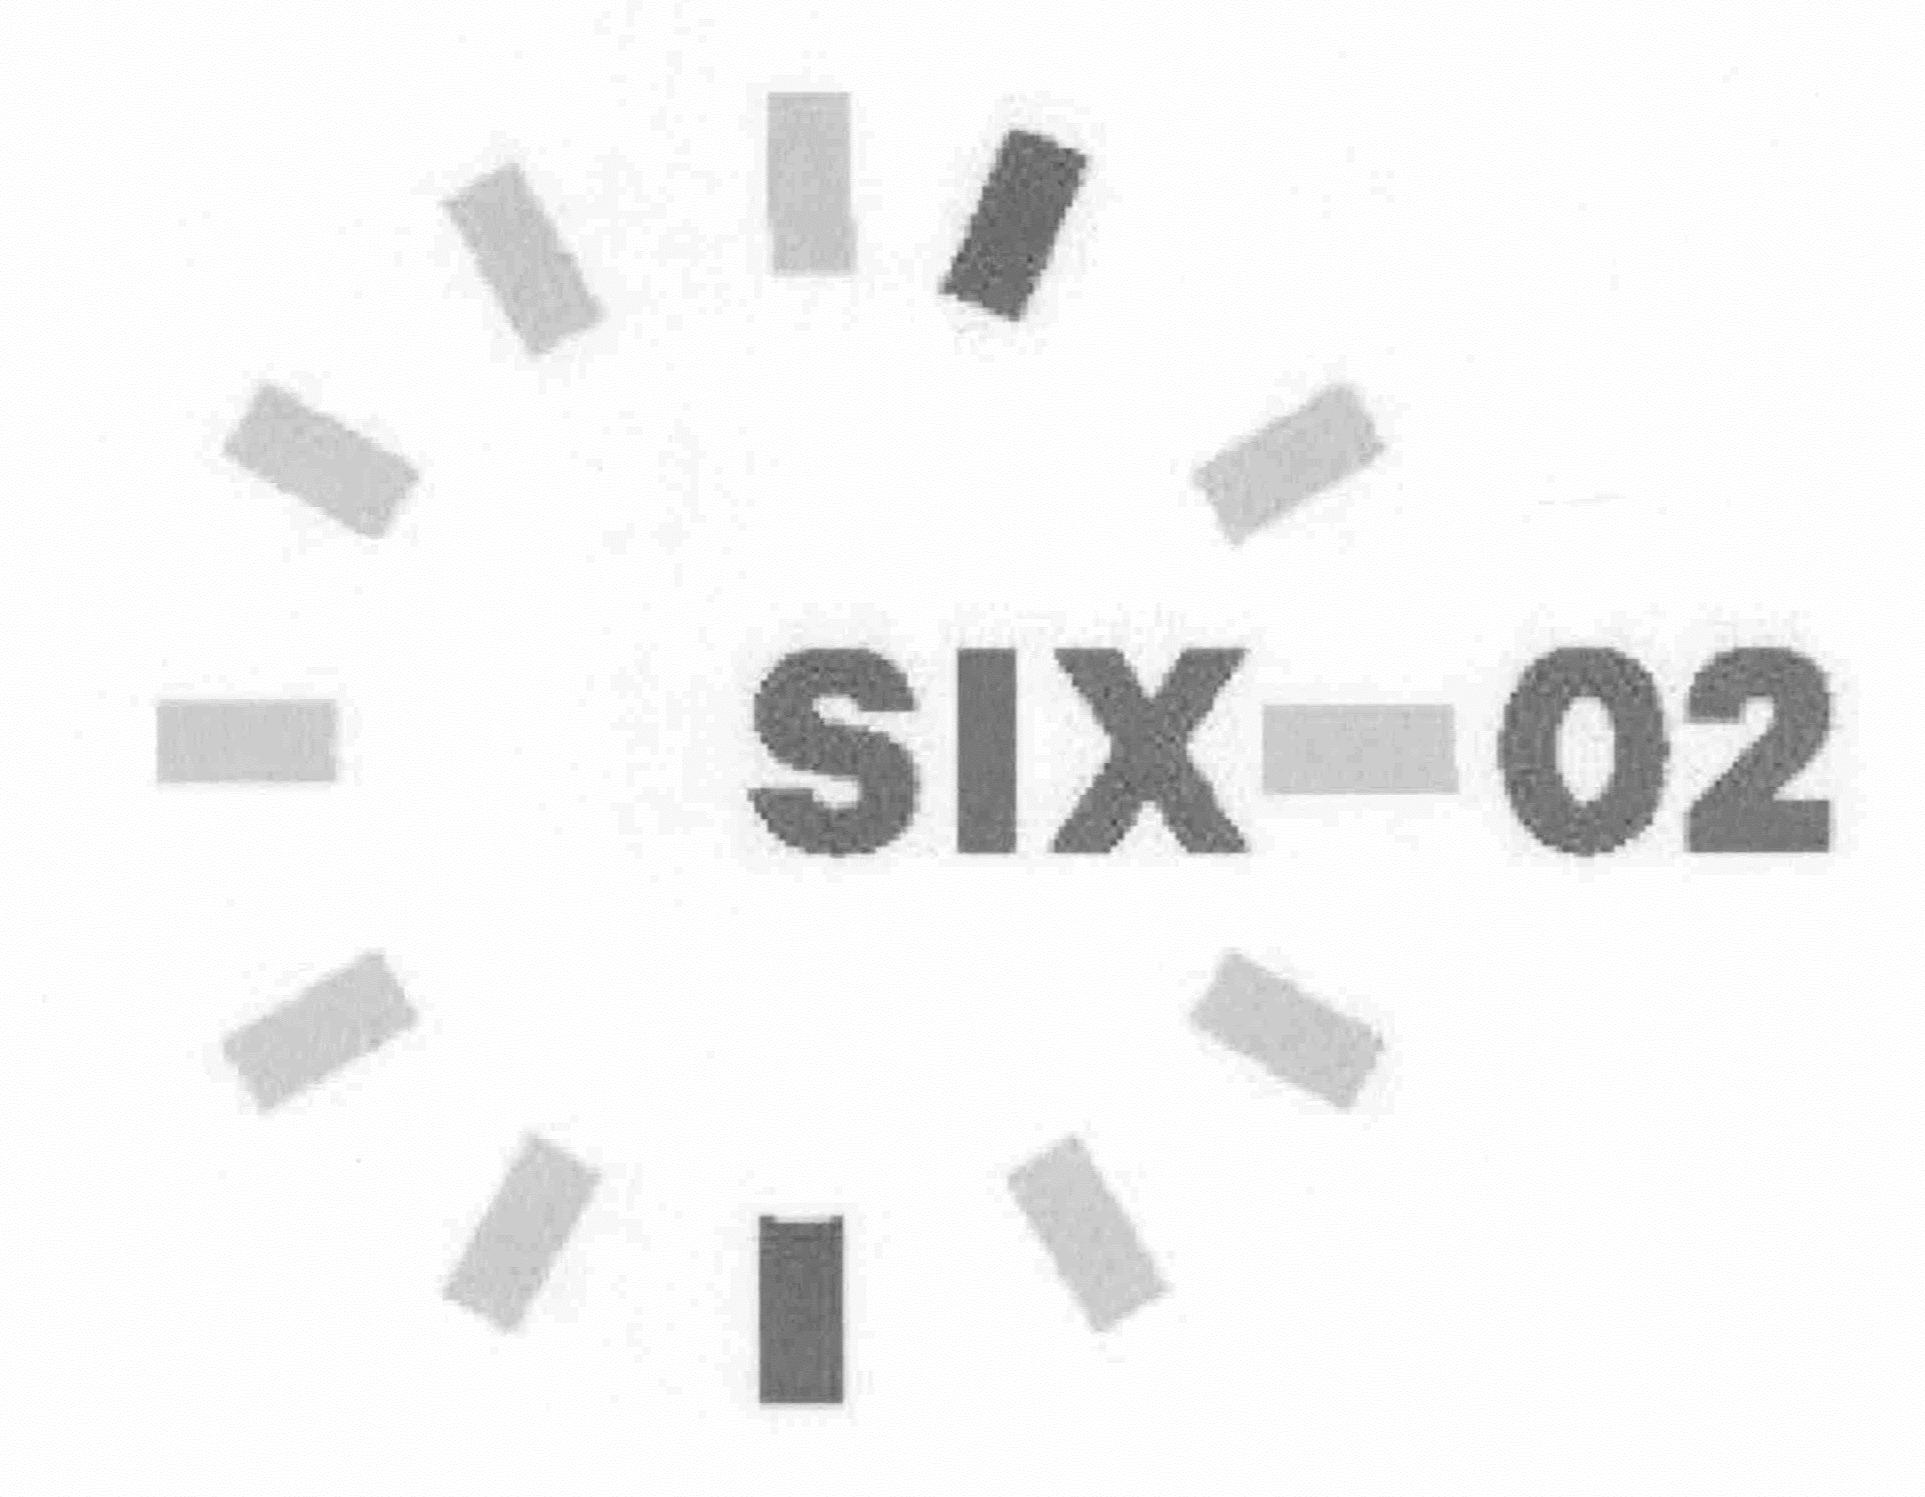 Trademark Logo SIX-02